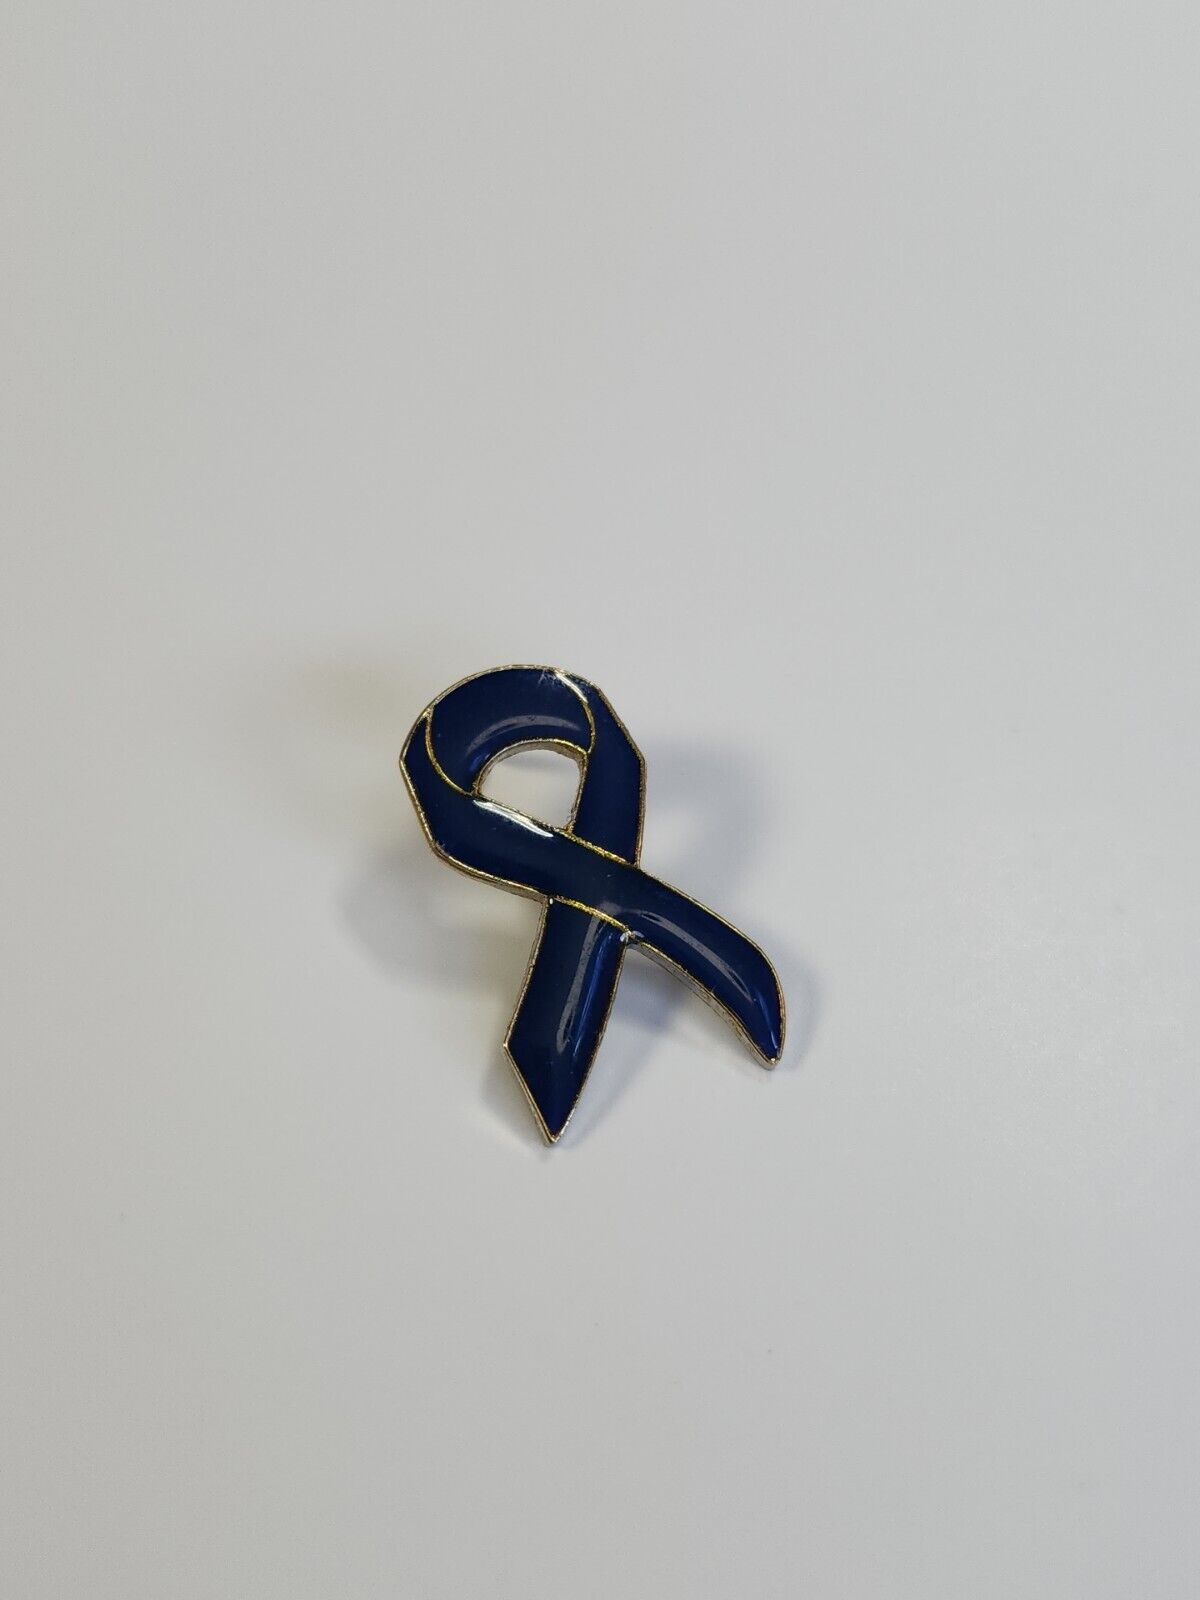 Dark Blue Awareness Ribbon Lapel Pin Colon Cancer & Colorectal Cancer Awareness 